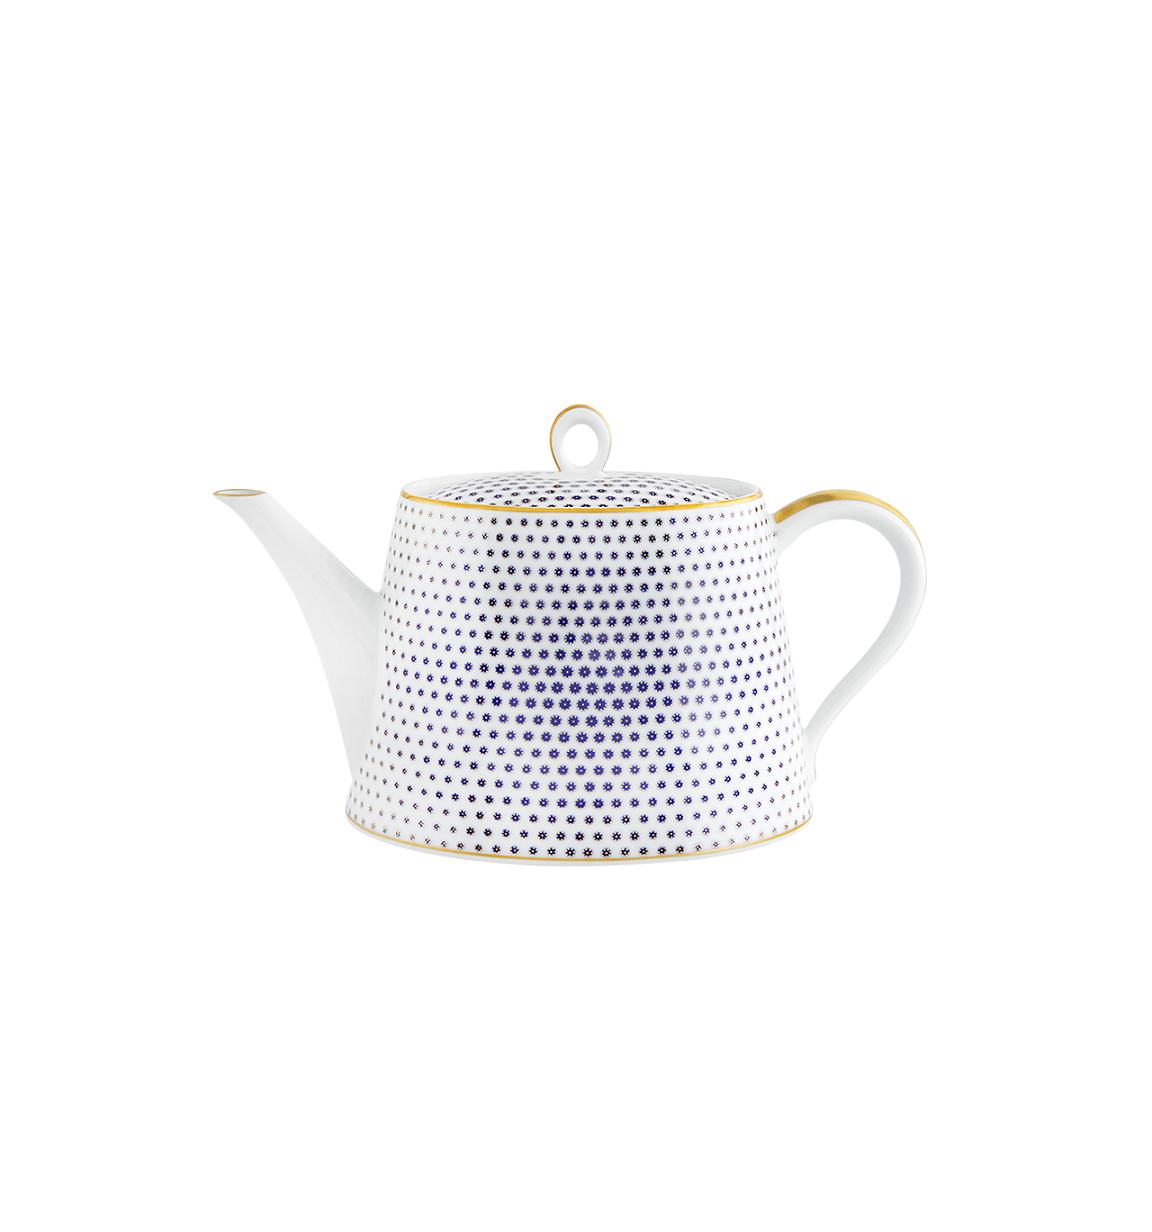 Teapot Vista Alegre Constellation D'or